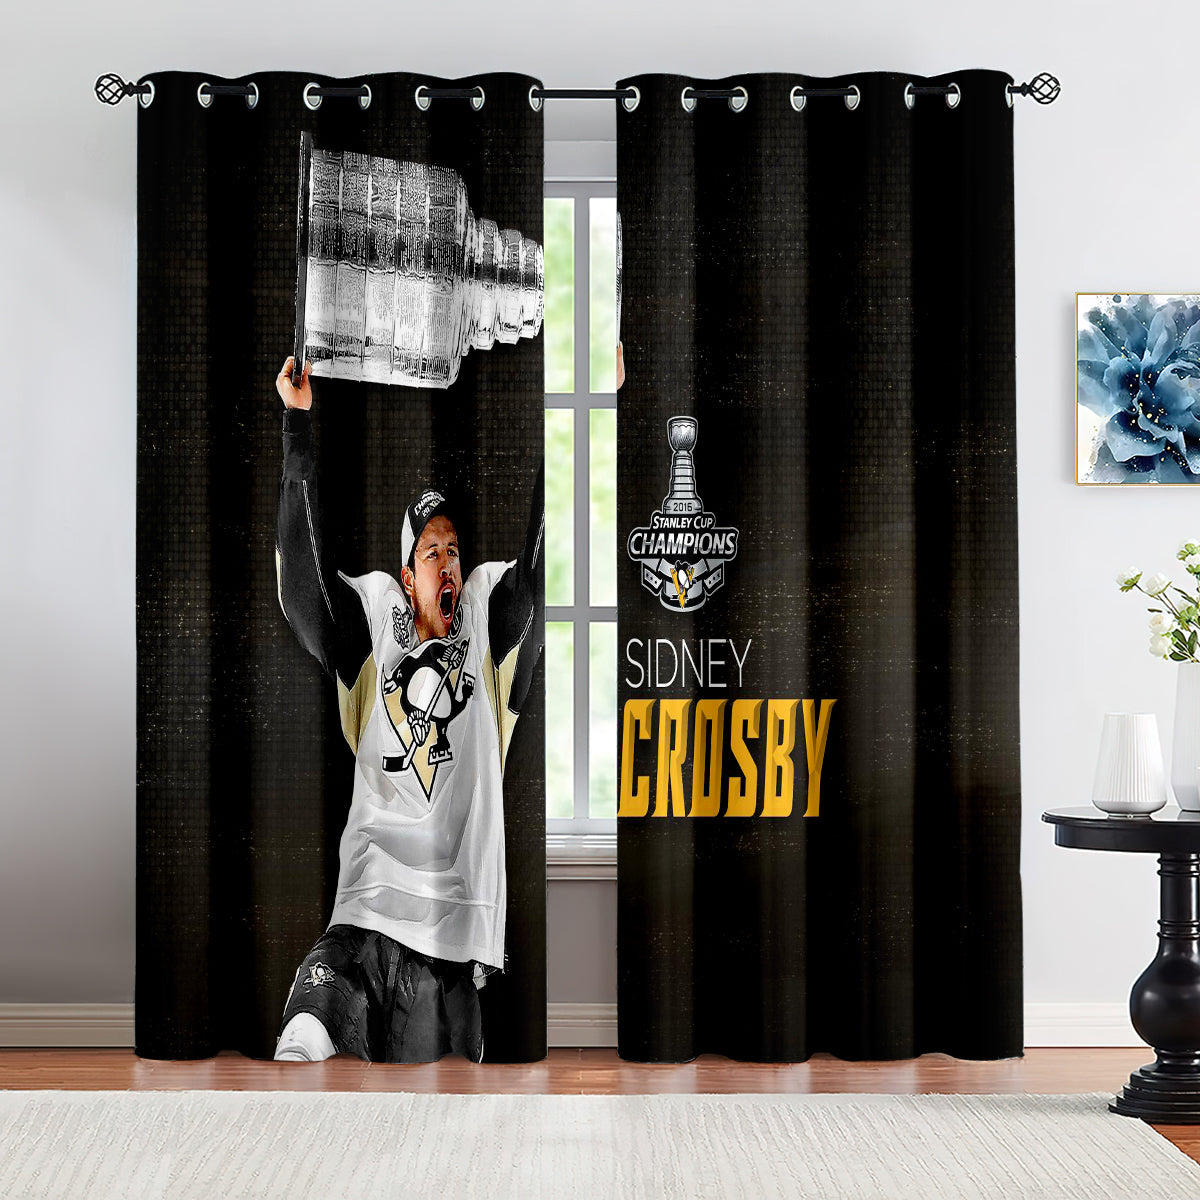 Pittsburgh Penguins Hockey League Blackout Curtains Drapes For Window Treatment Set